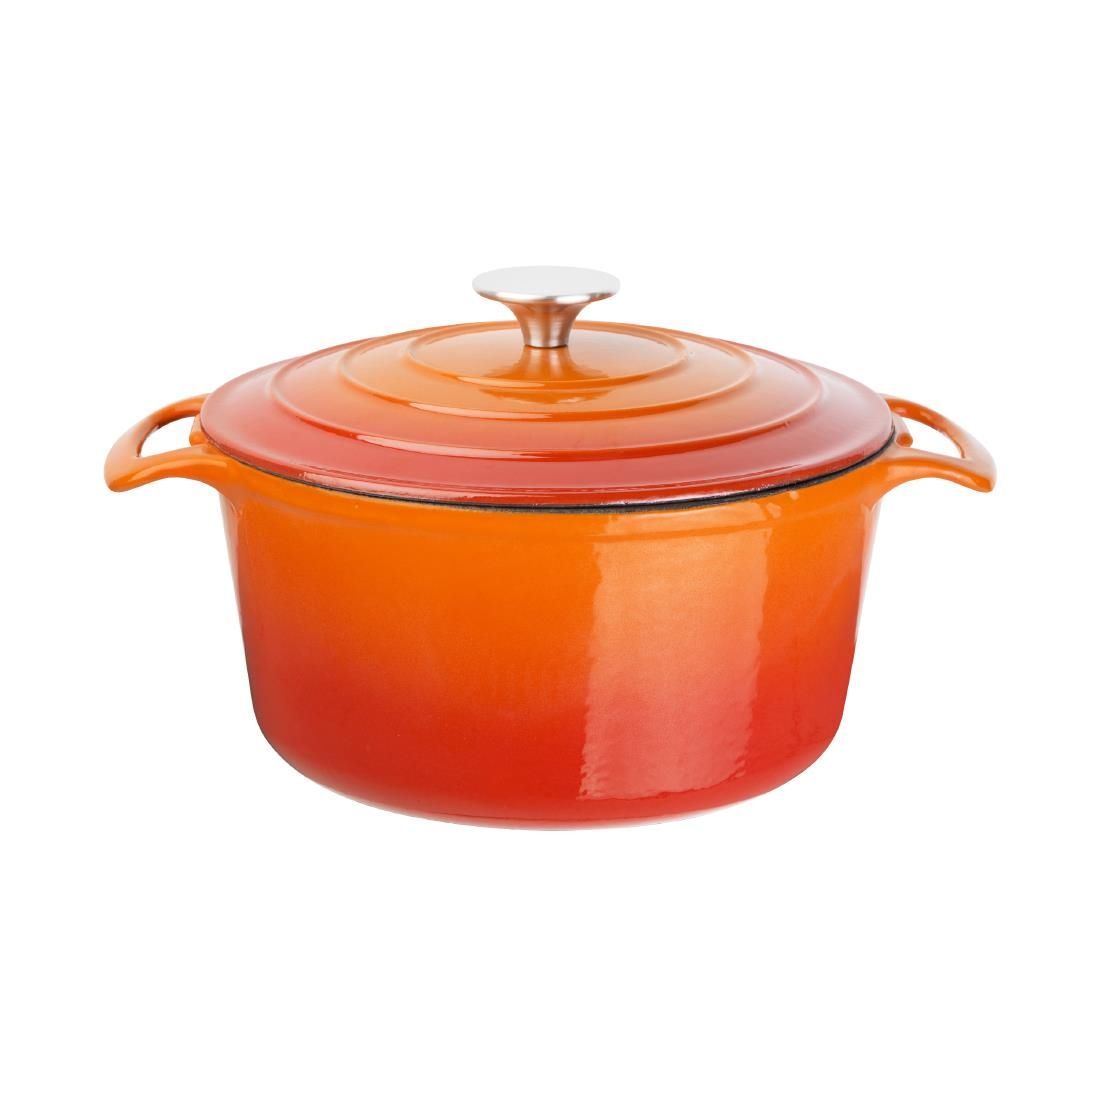 Vogue Orange Round Casserole Dish 3.2Ltr - GH302 Oven to Table Vogue   